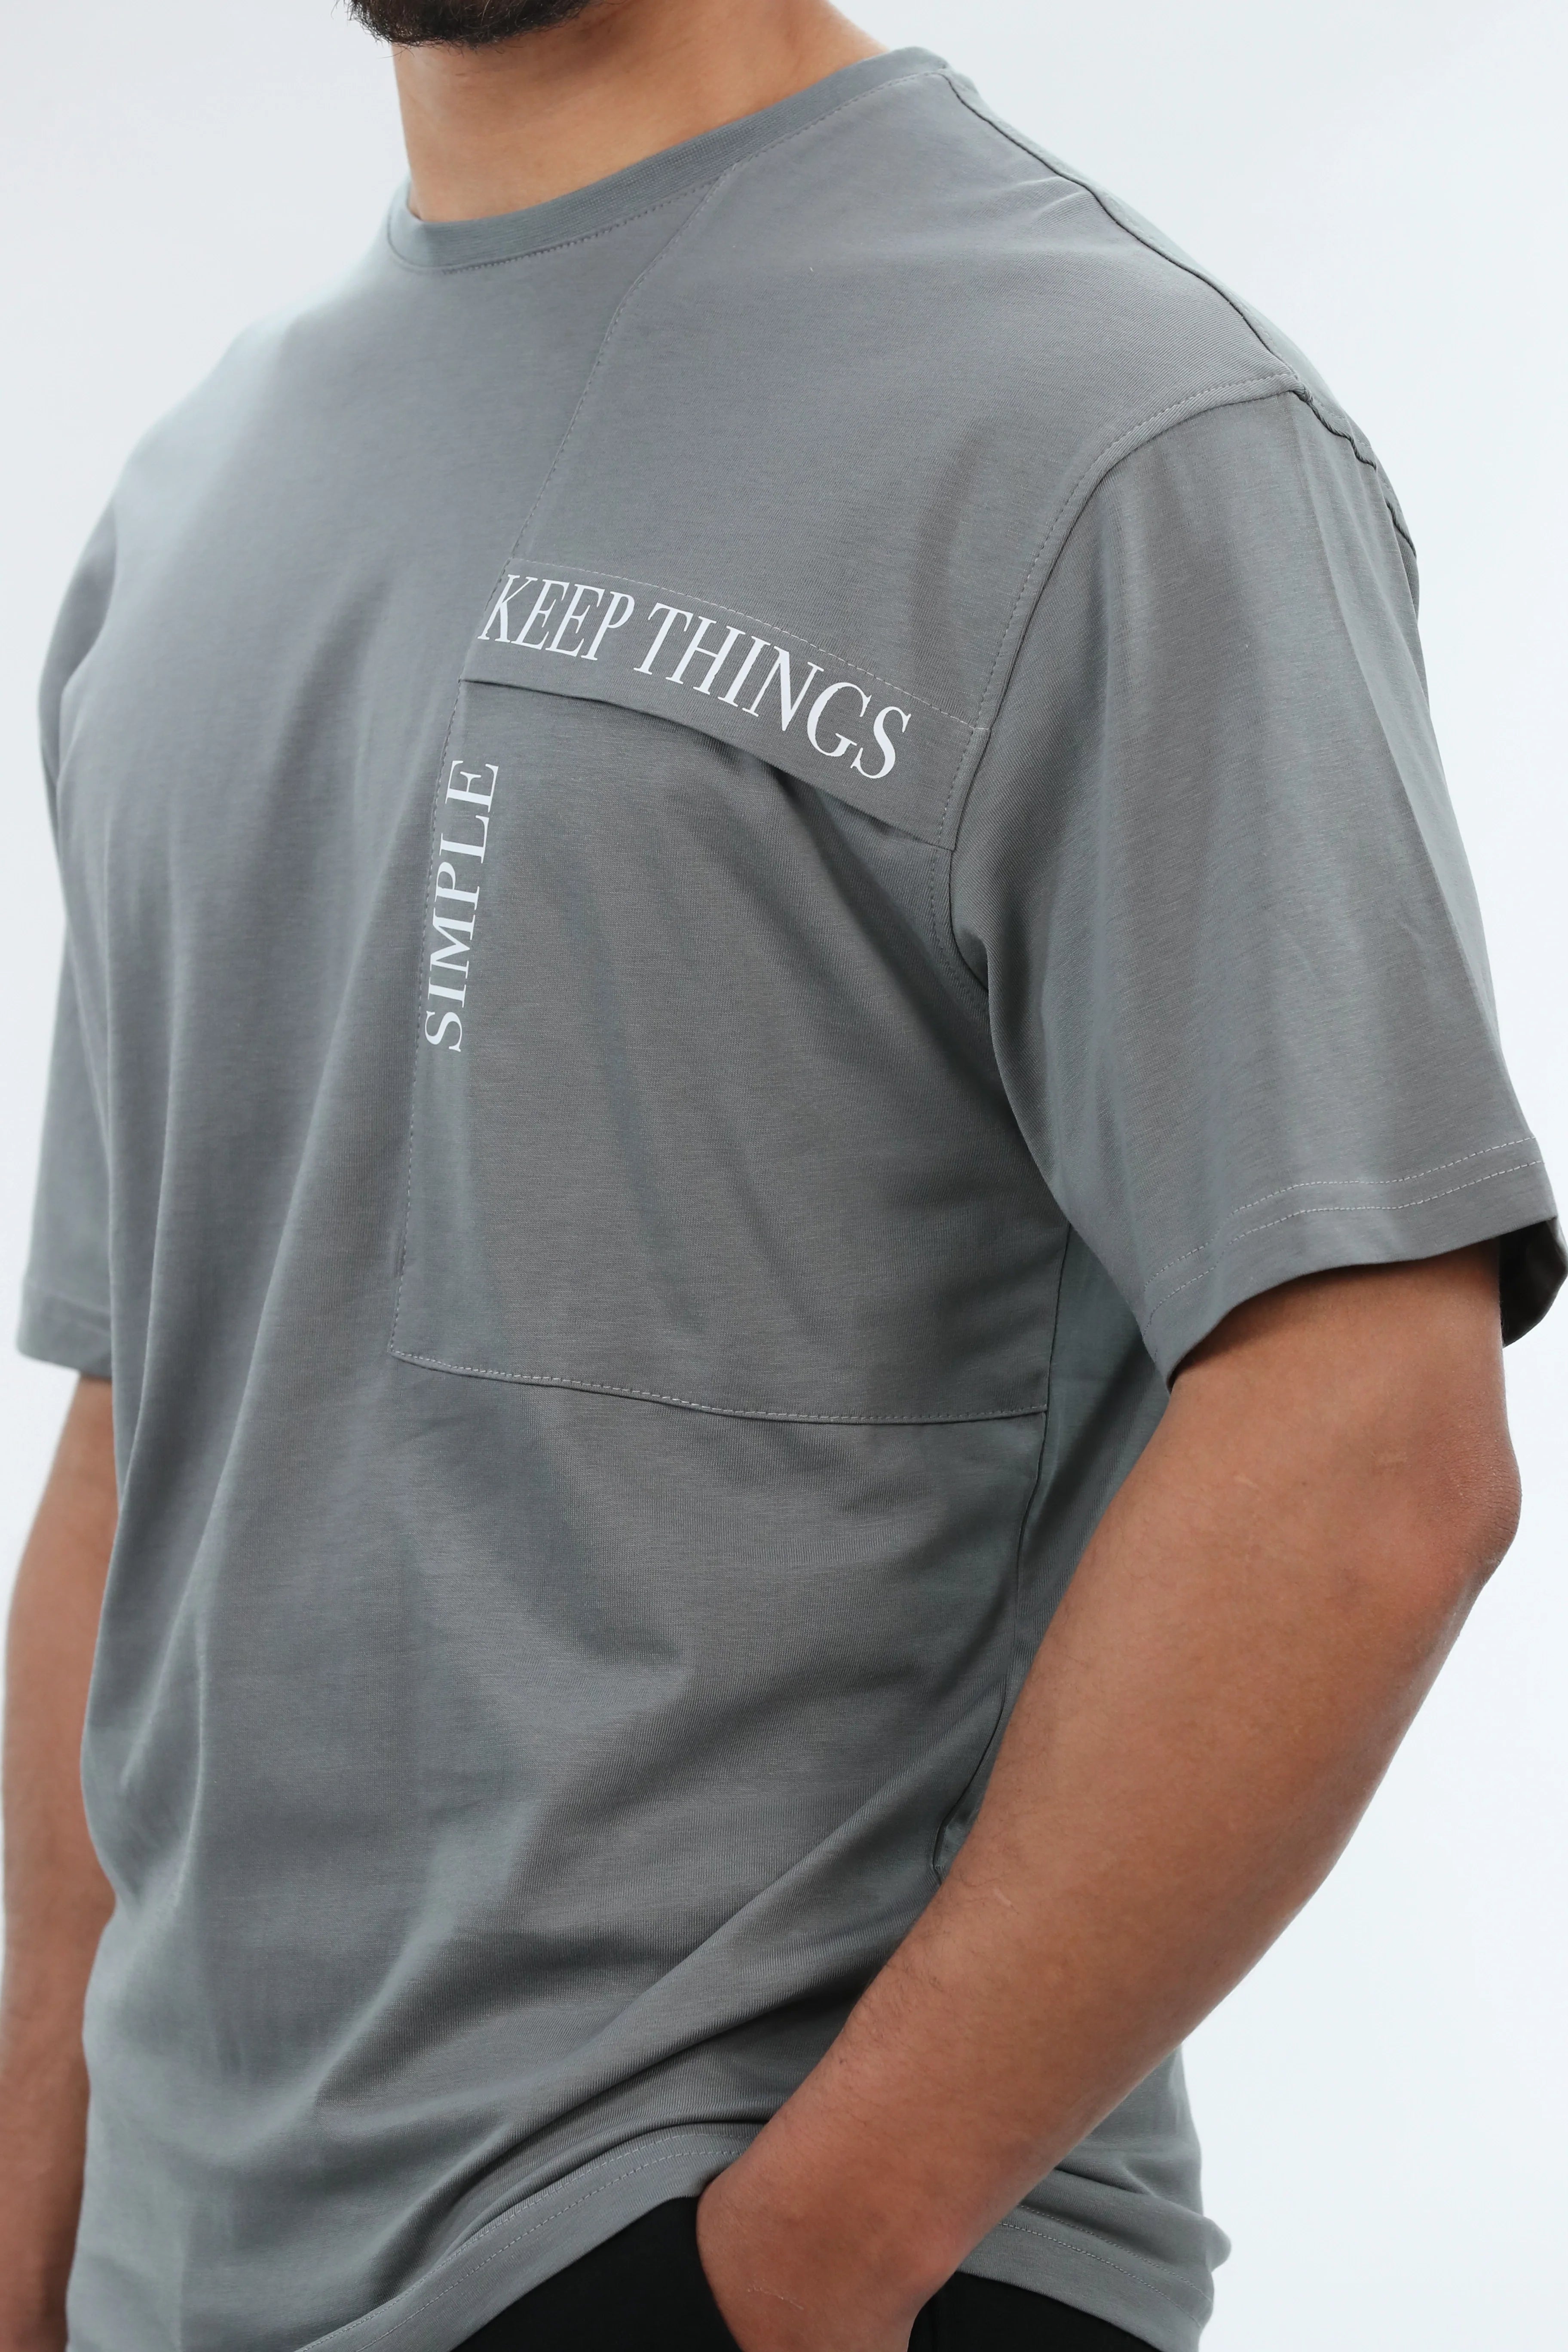 Oversized Grey T-Shirt With Pocket Design